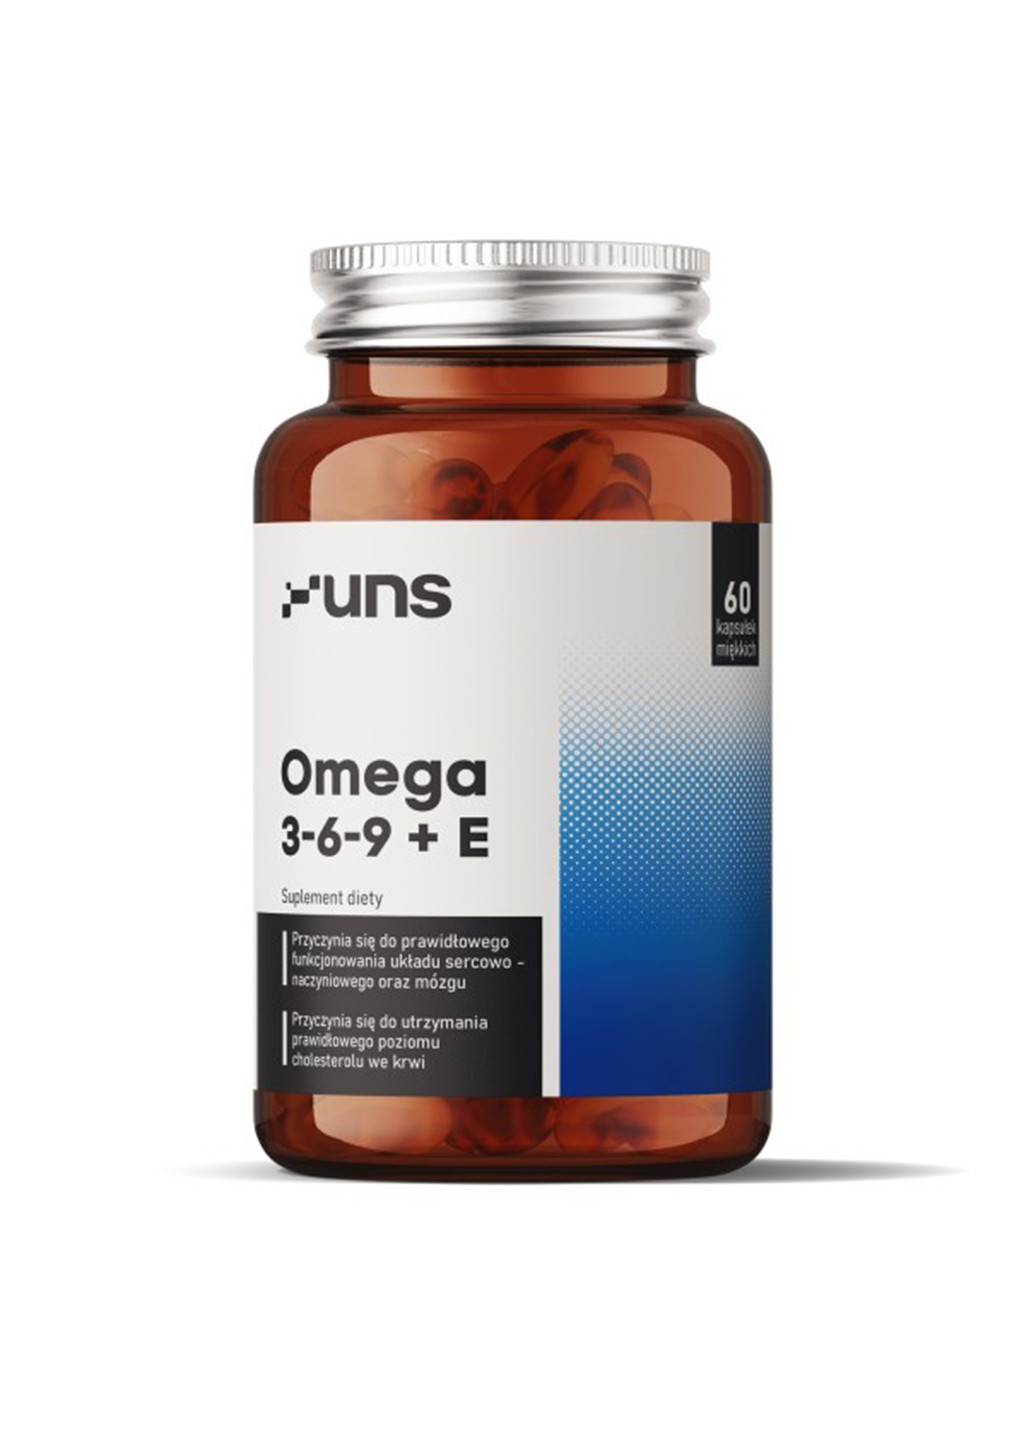 Жирные кислоты Омега 3 Omega 3 65% + E - 60 caps UNS Vitamins (239155053)